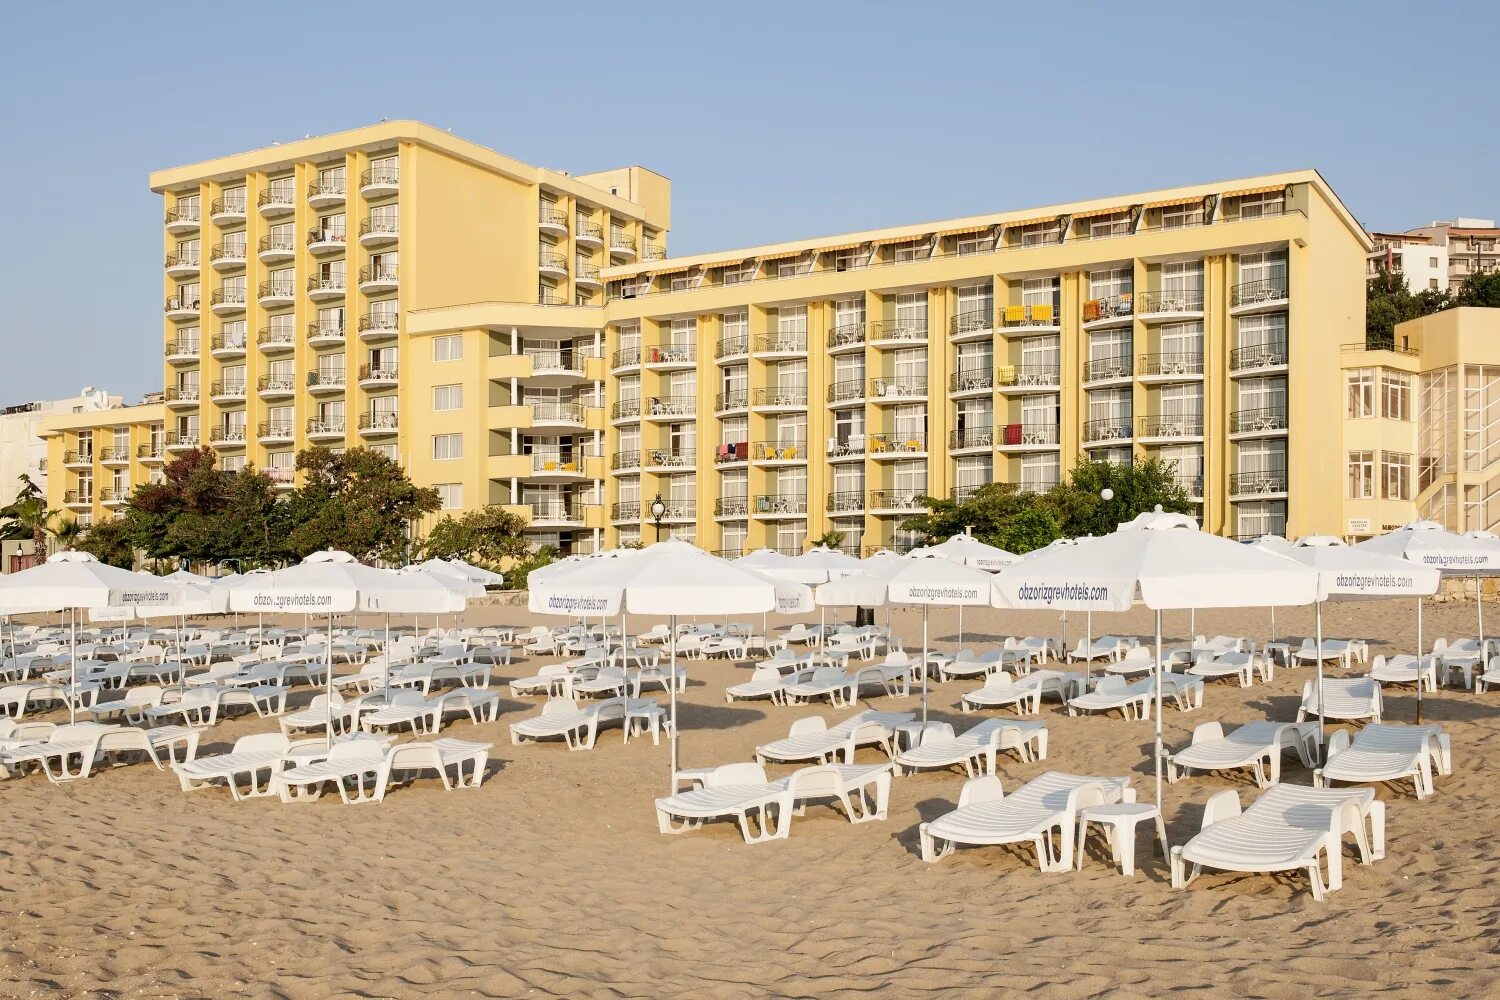 Сайт золотые курорты. Болгария Grifid. Sentido Marea золотые Пески. Grifid encanto Beach (4*) Болгария. Отель в Болгарии sentido Marea.